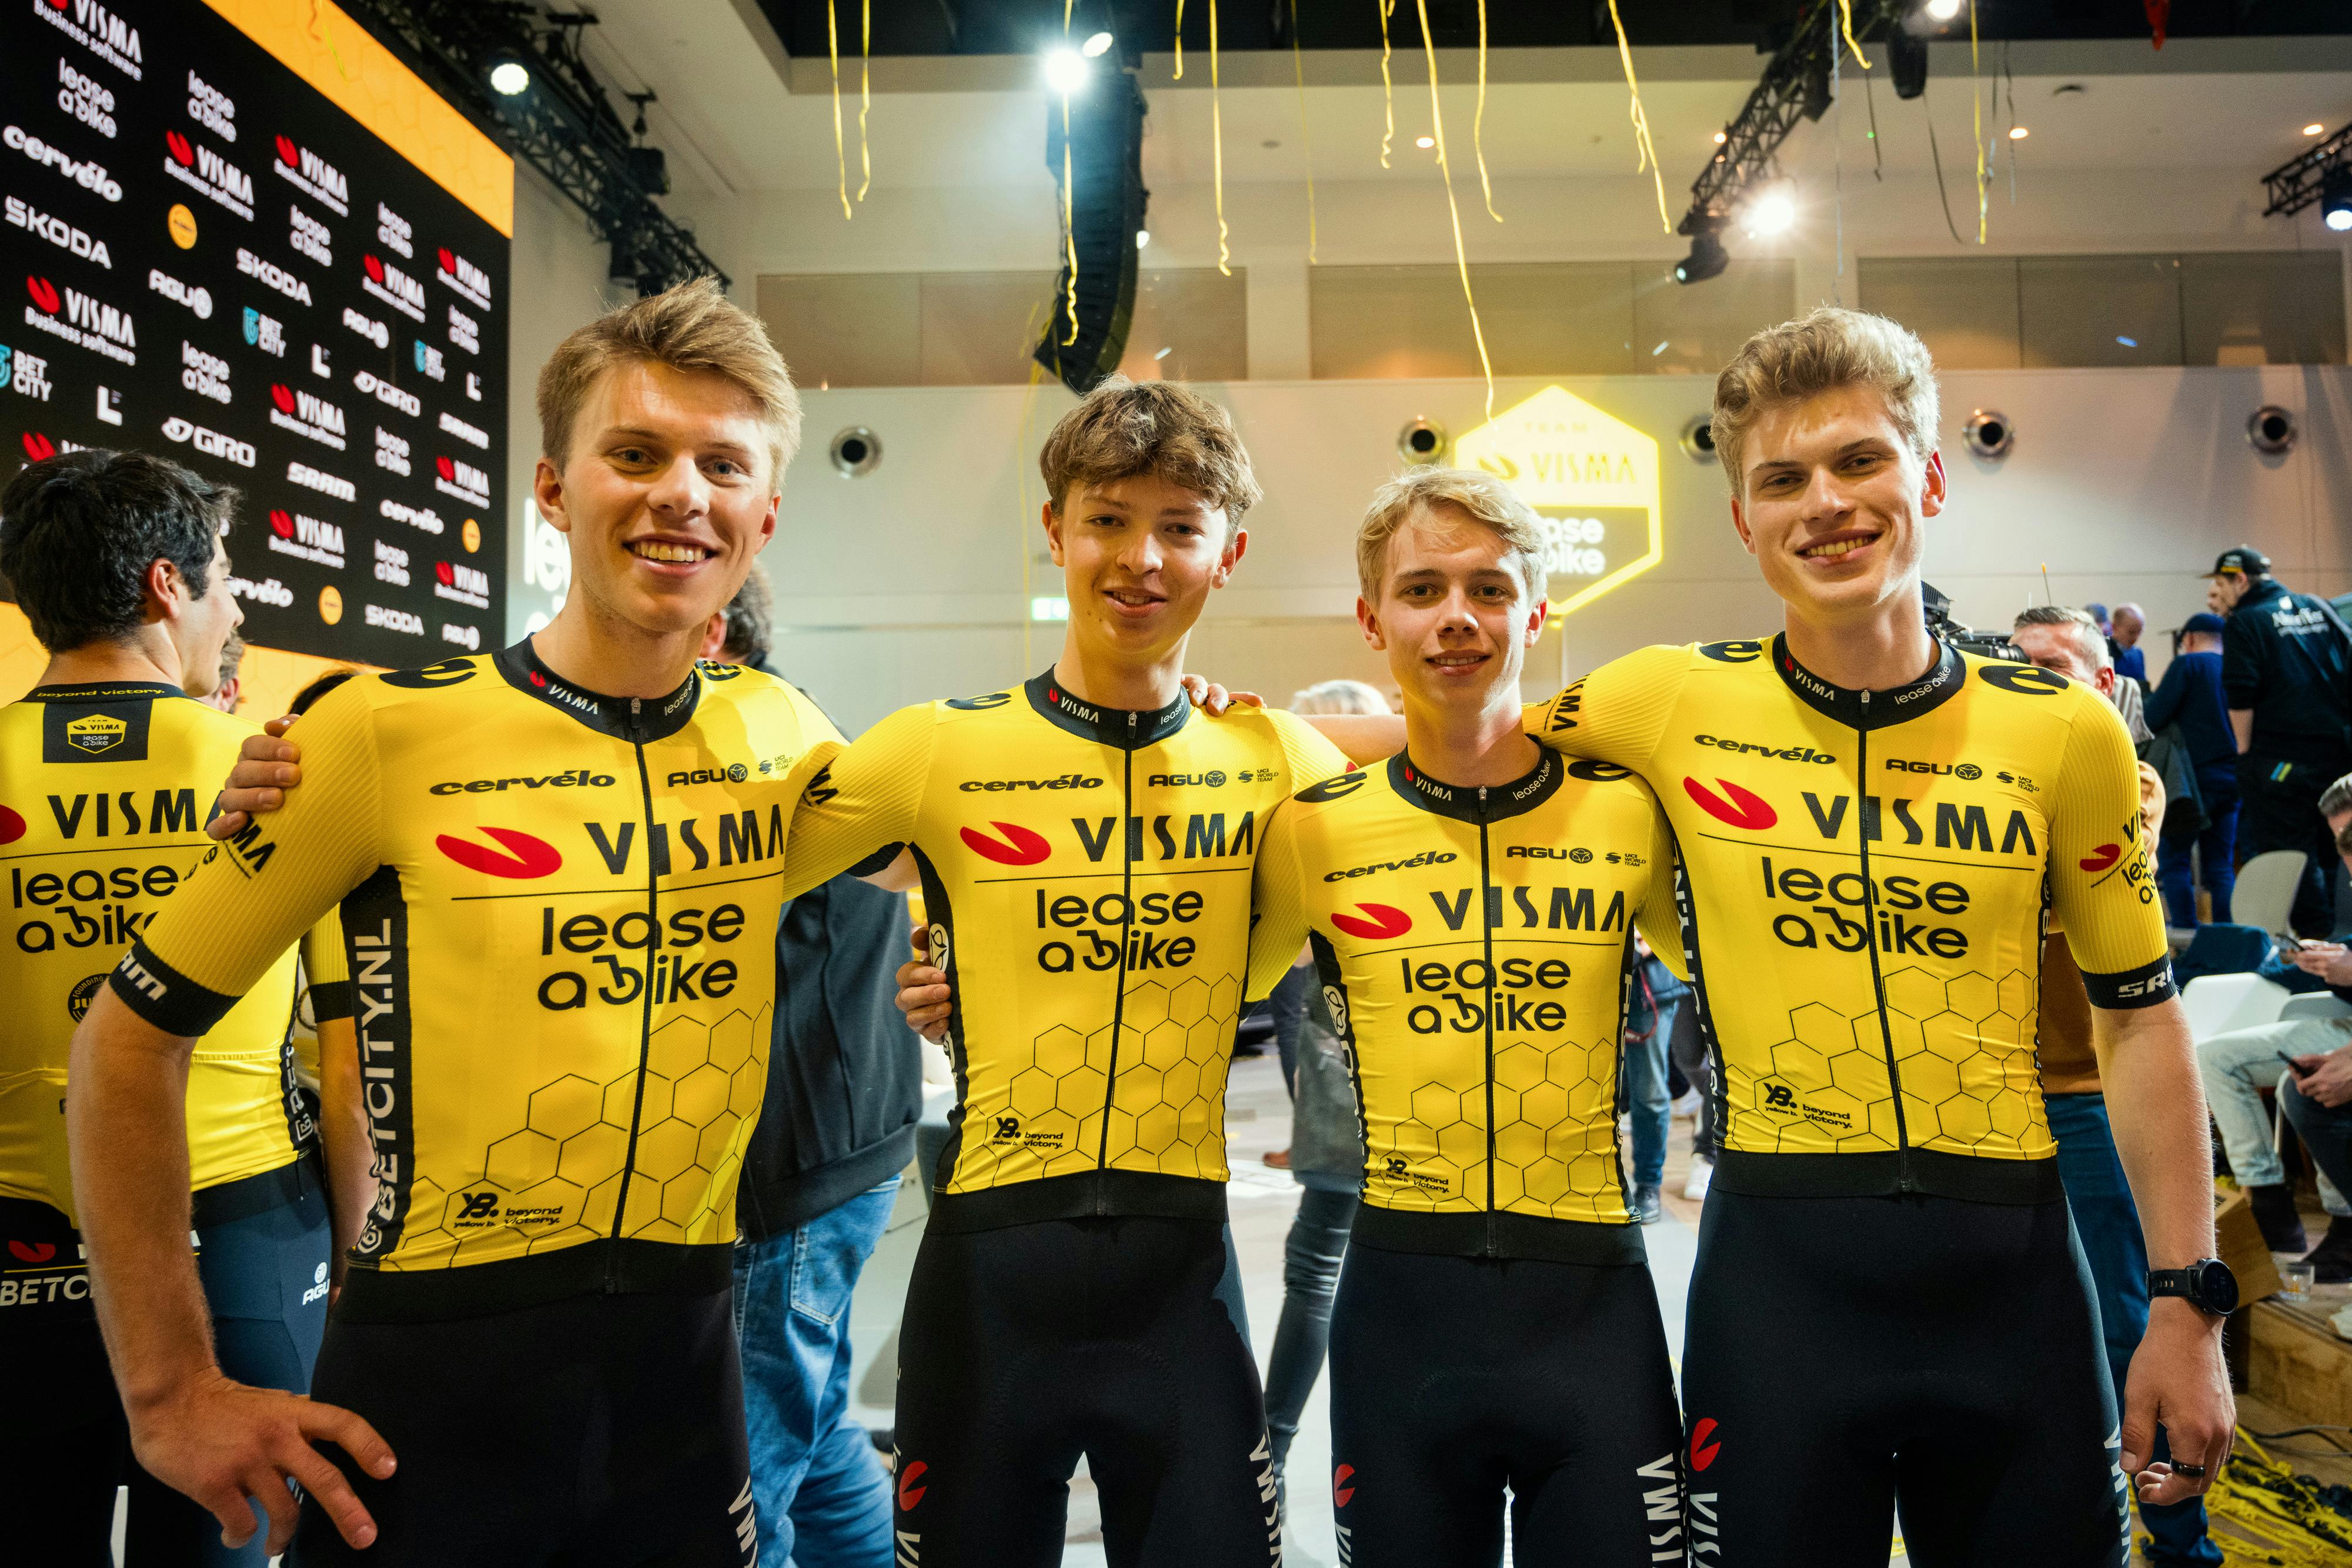 Team Visma, Lease a Bike, Official webshop Team Visma